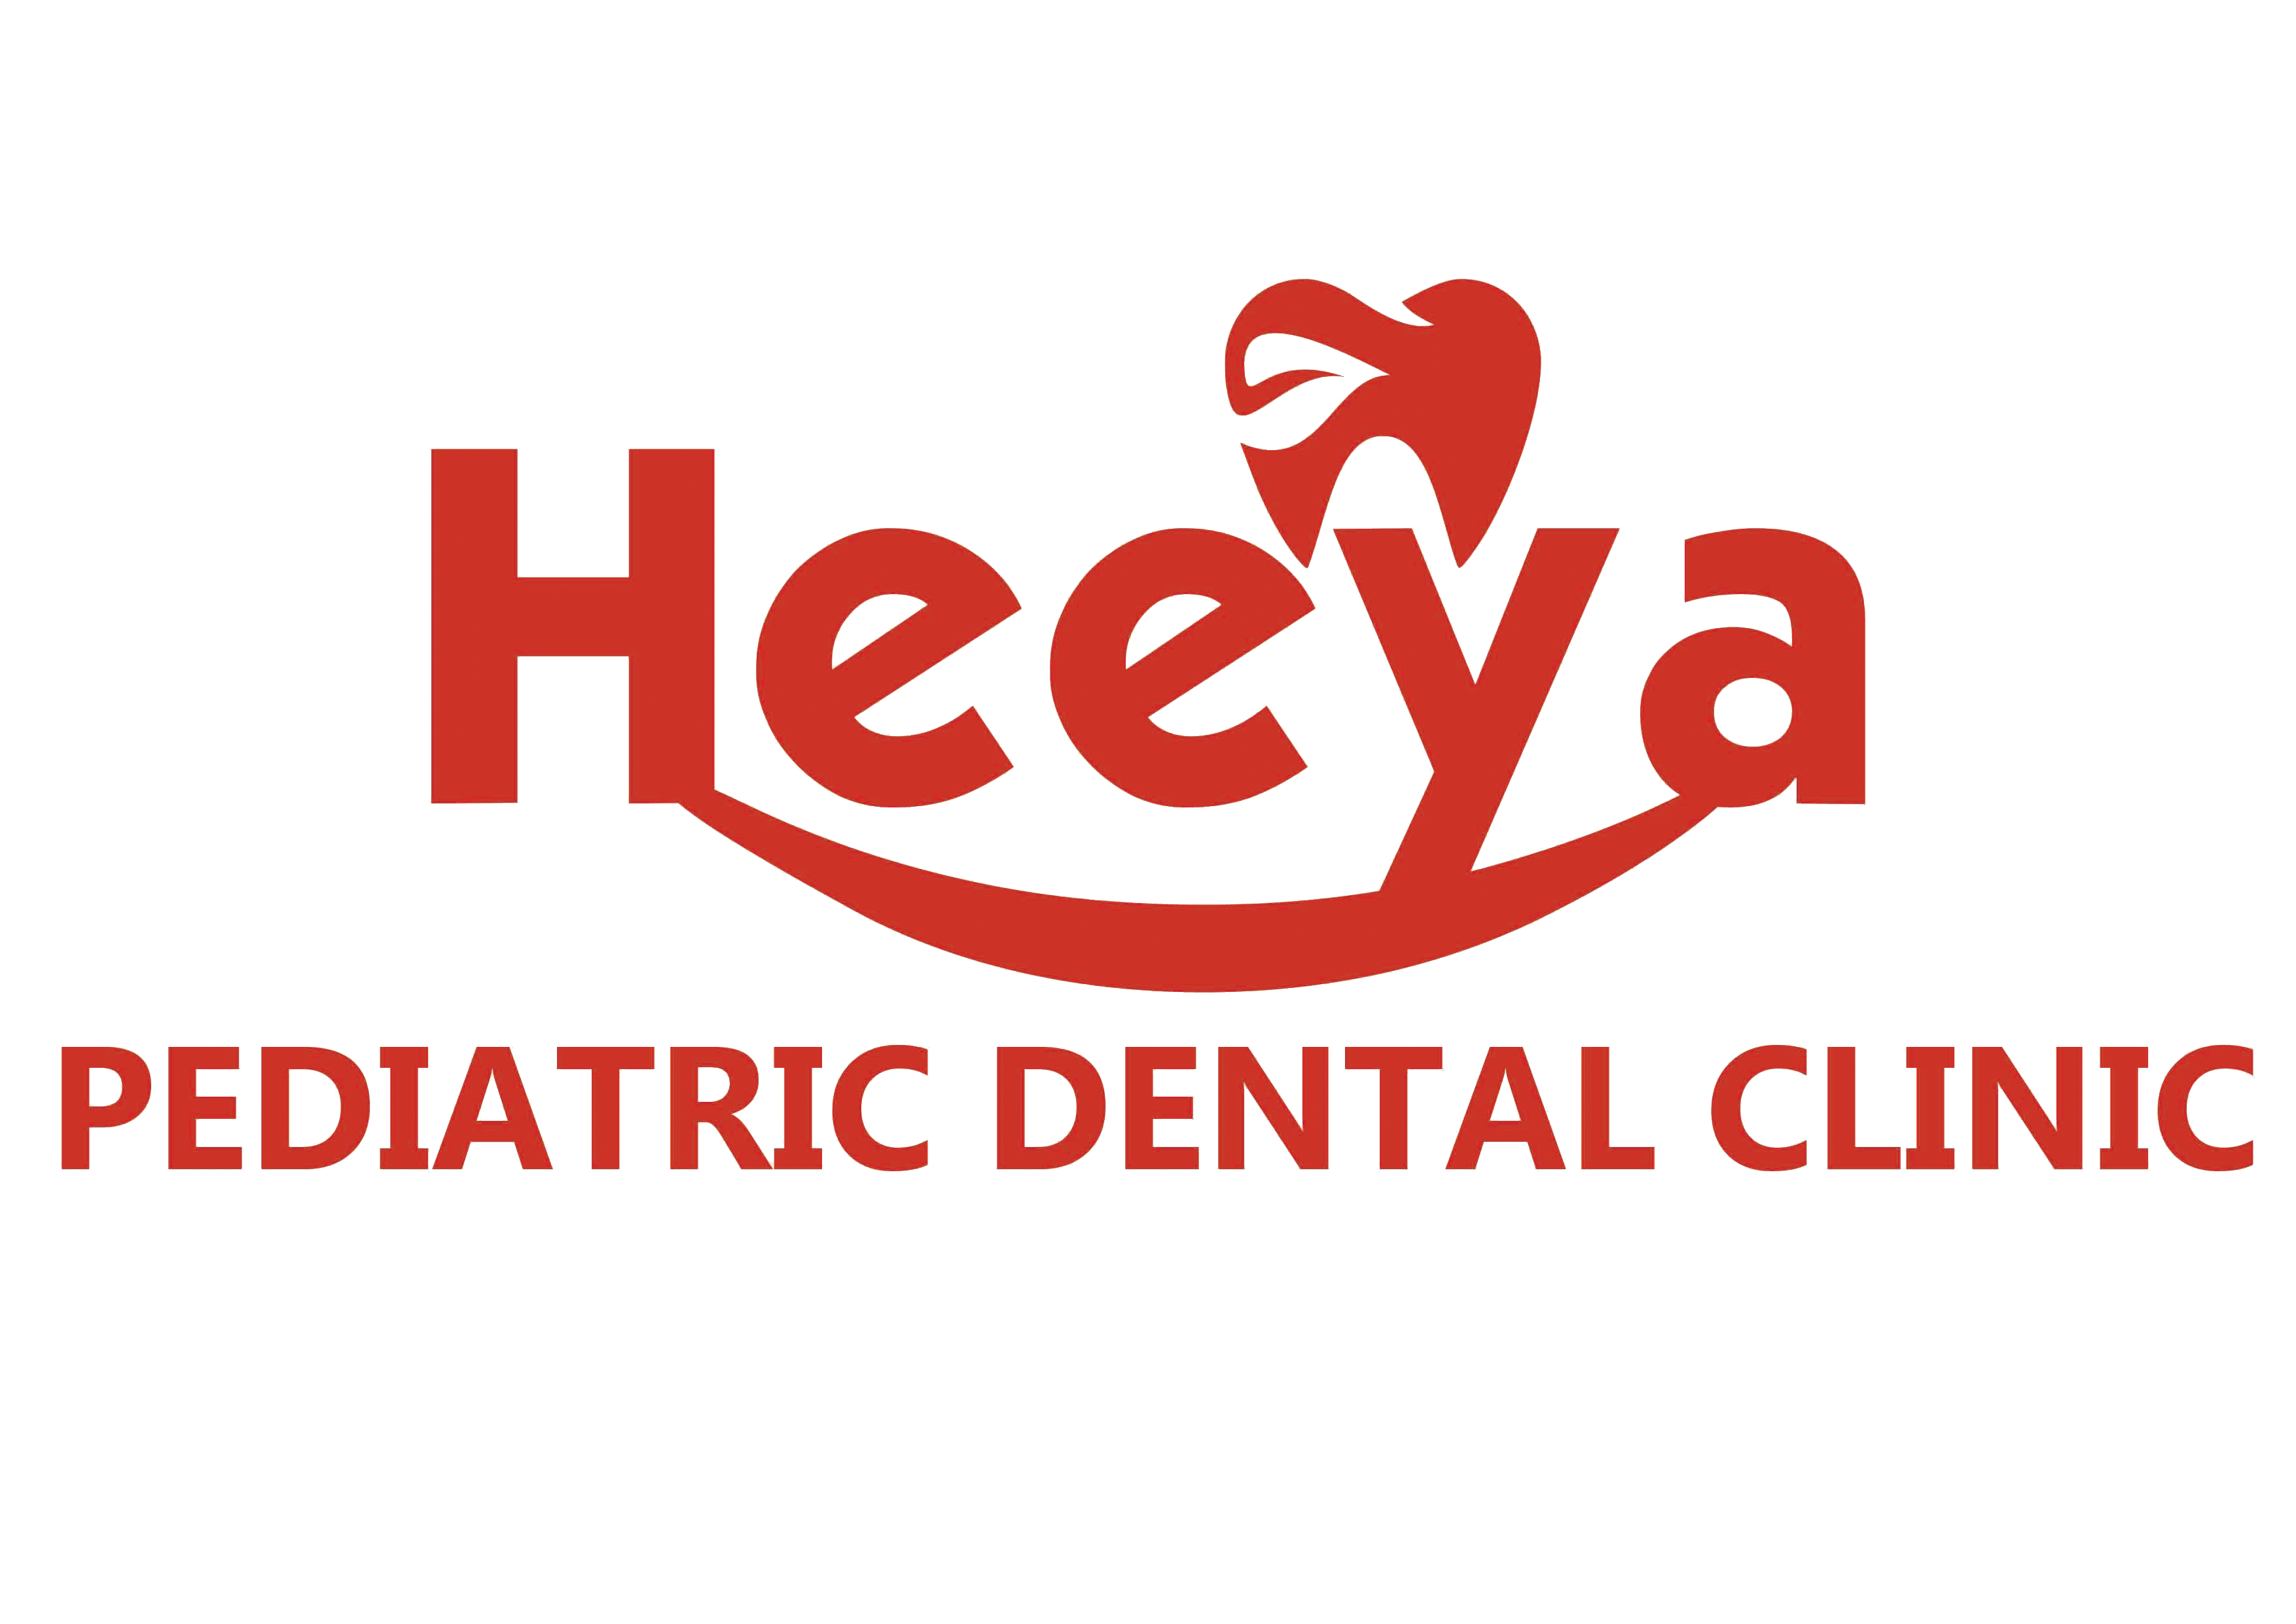 Heeya Pediatric Dental Clinic|Veterinary|Medical Services